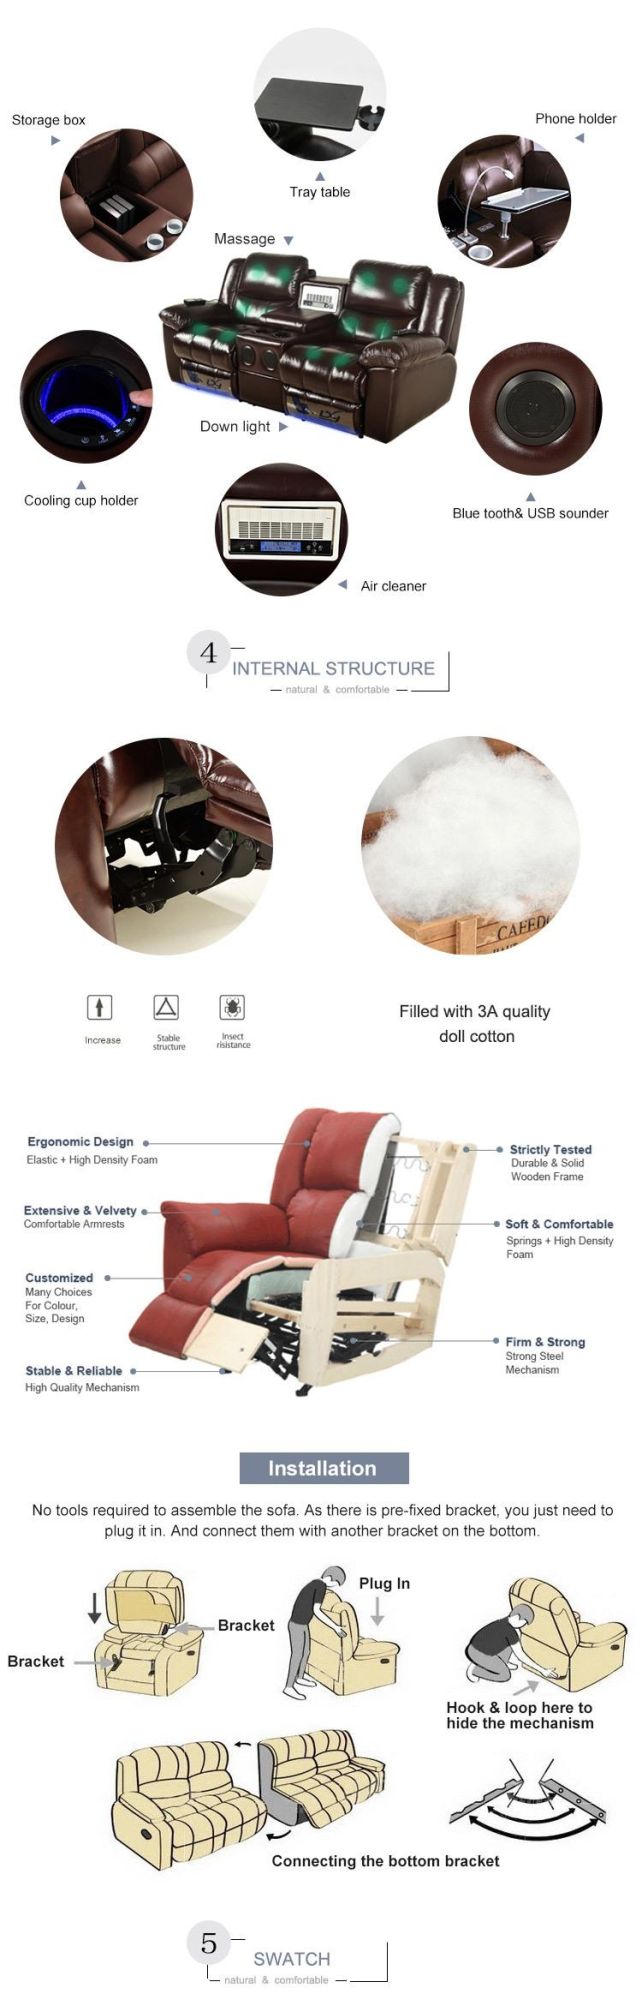 Modern Fabric Sofa Set Price Mini Order Set with Wood Frame